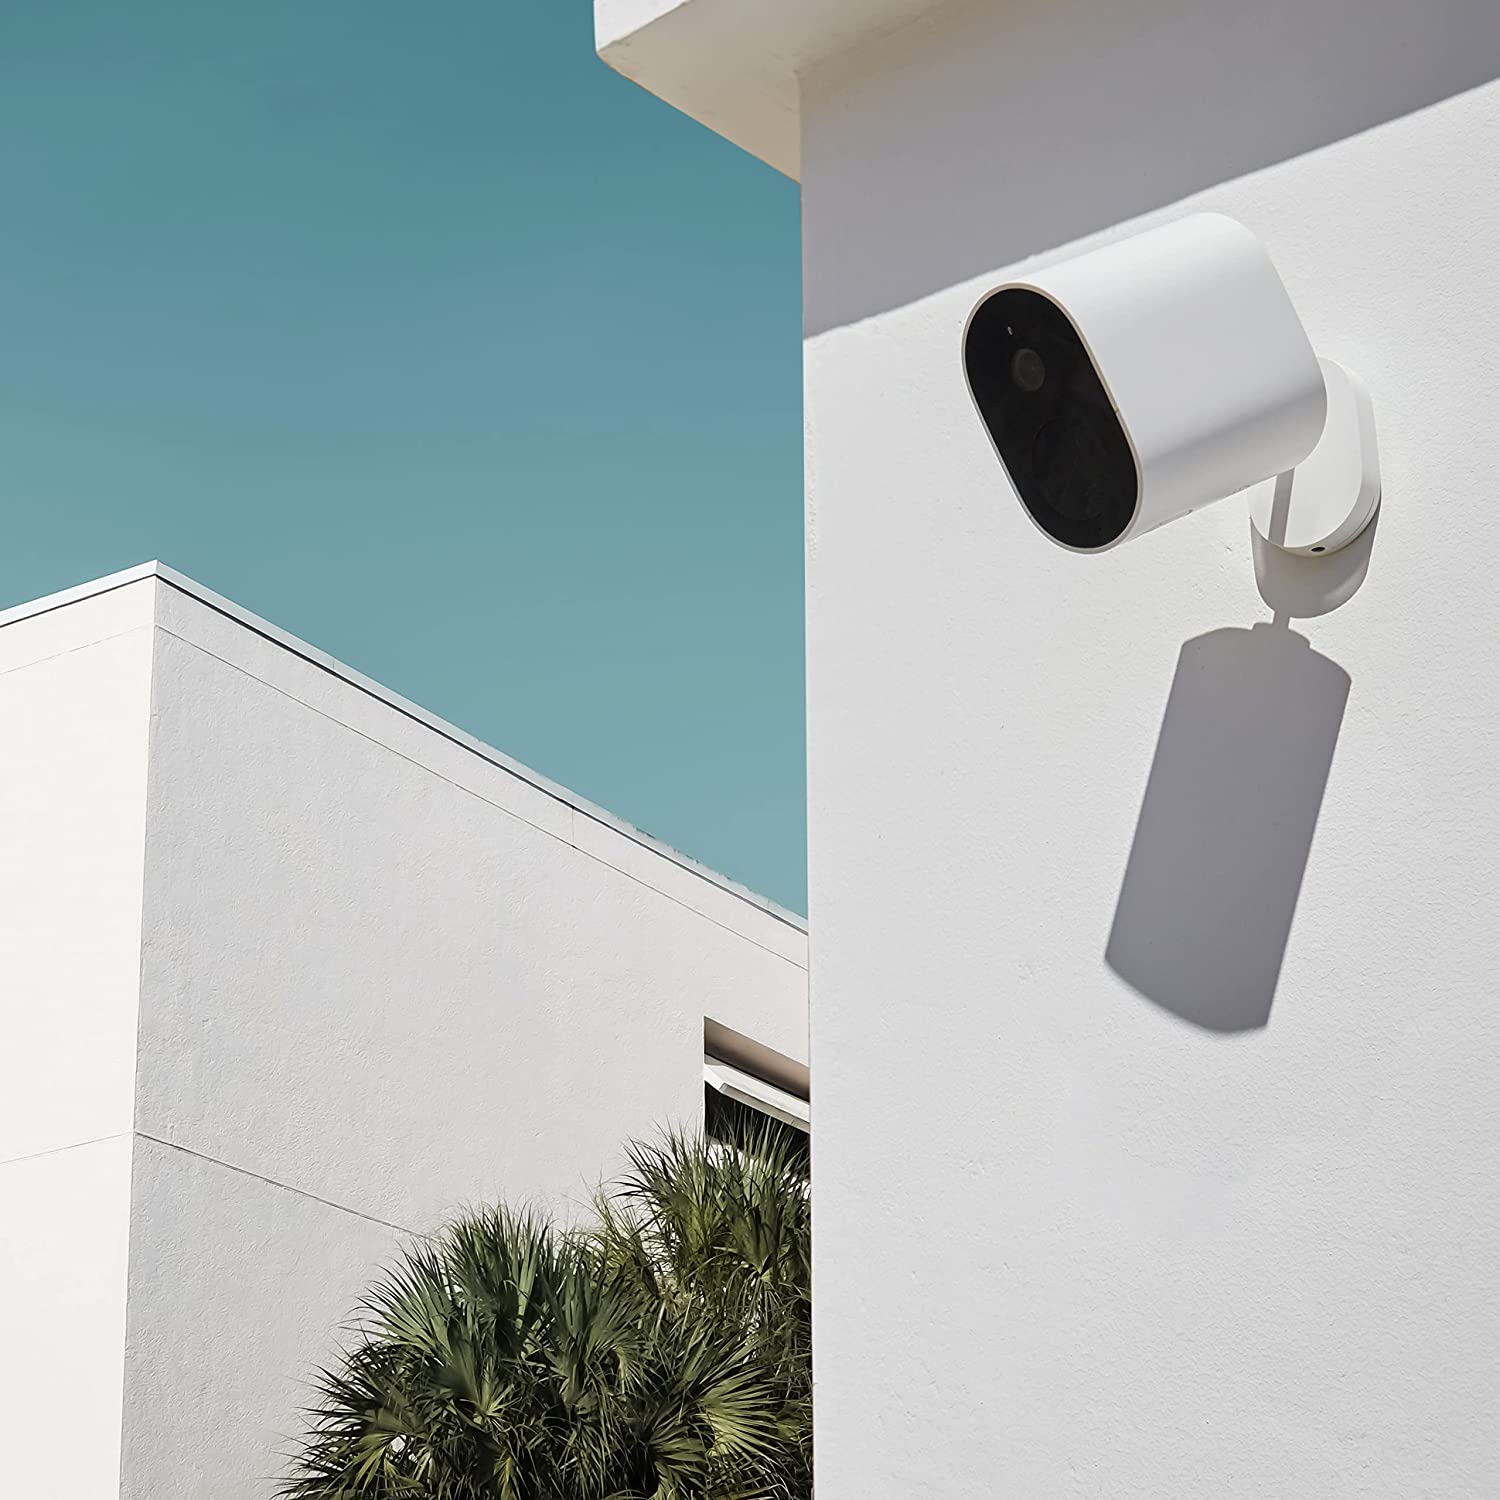 Xiaomi Mi Wireless Outdoor Security Camera Set 1080p – Weatherproof, 2-Way audio, 130° wide angle, 7m PIR human detection